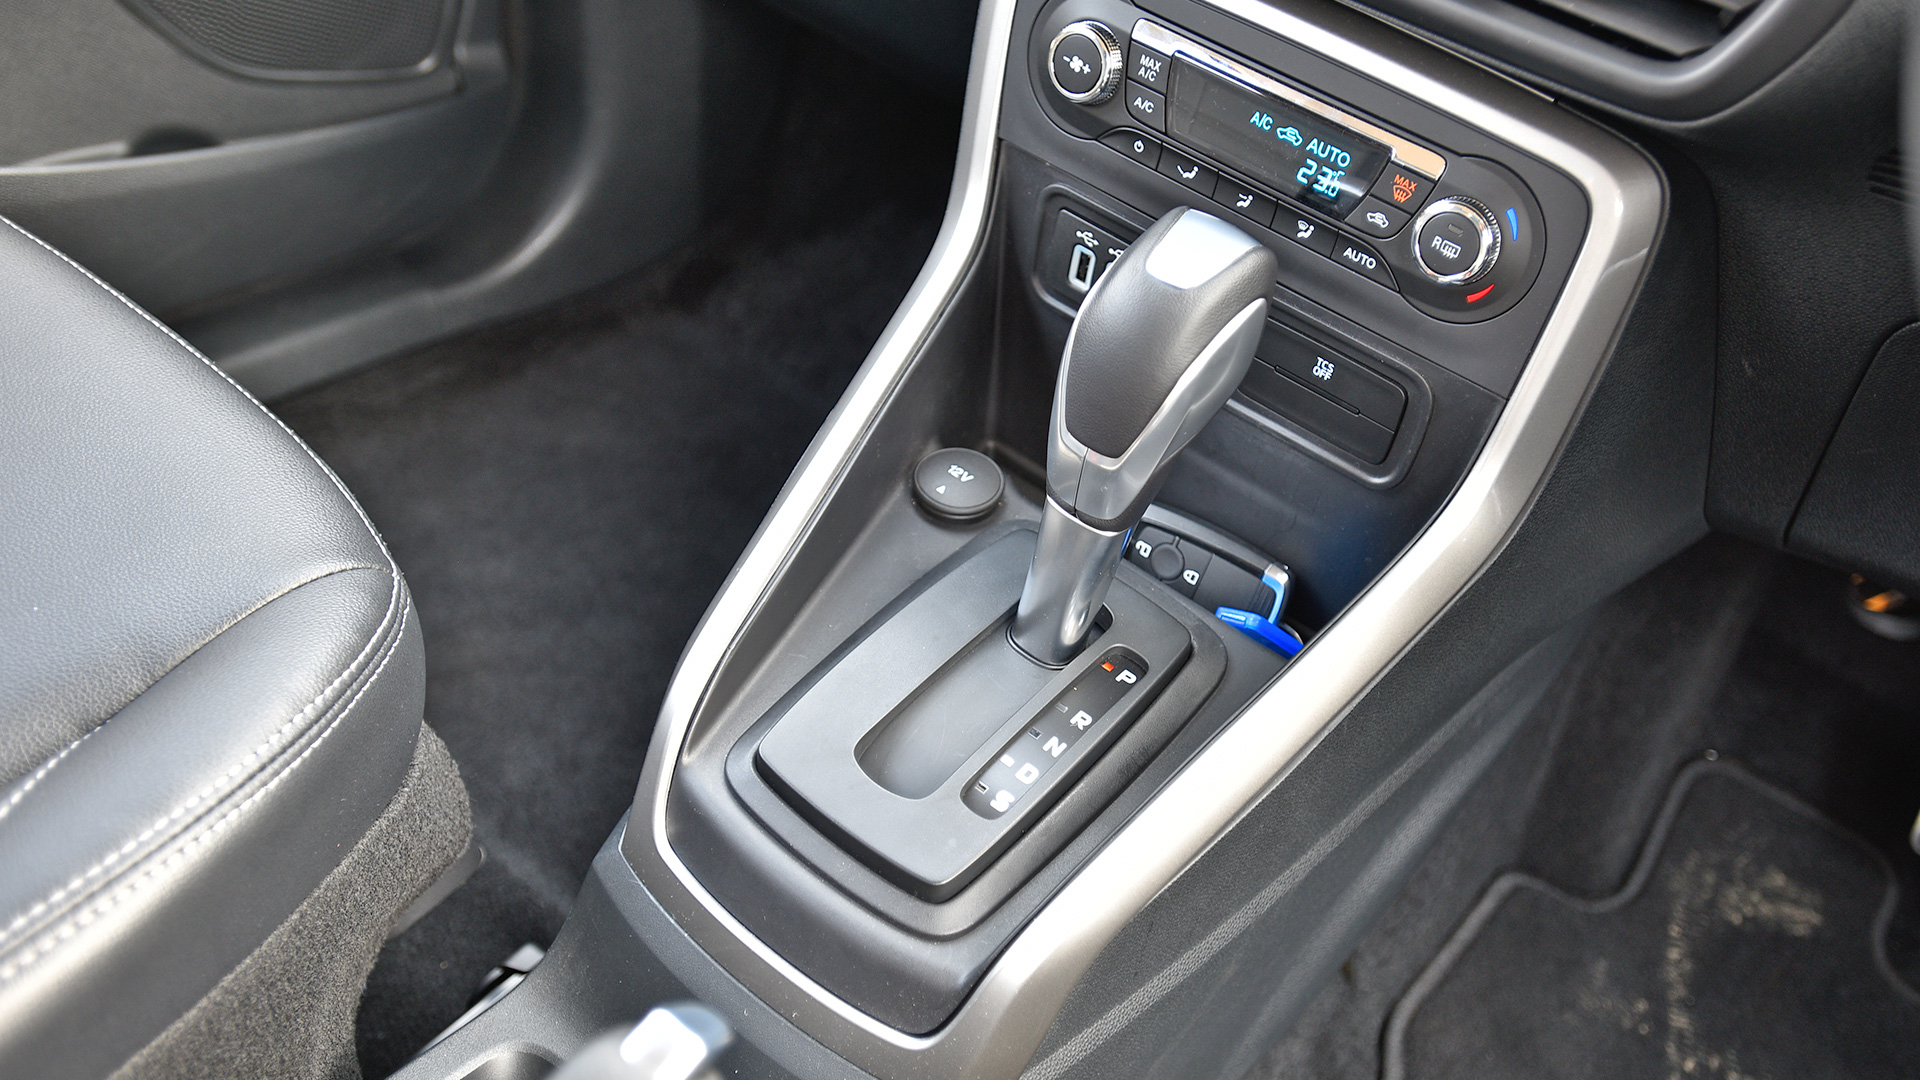 Ford Ecosport 2018 1.5 Diesel Platinum Interior